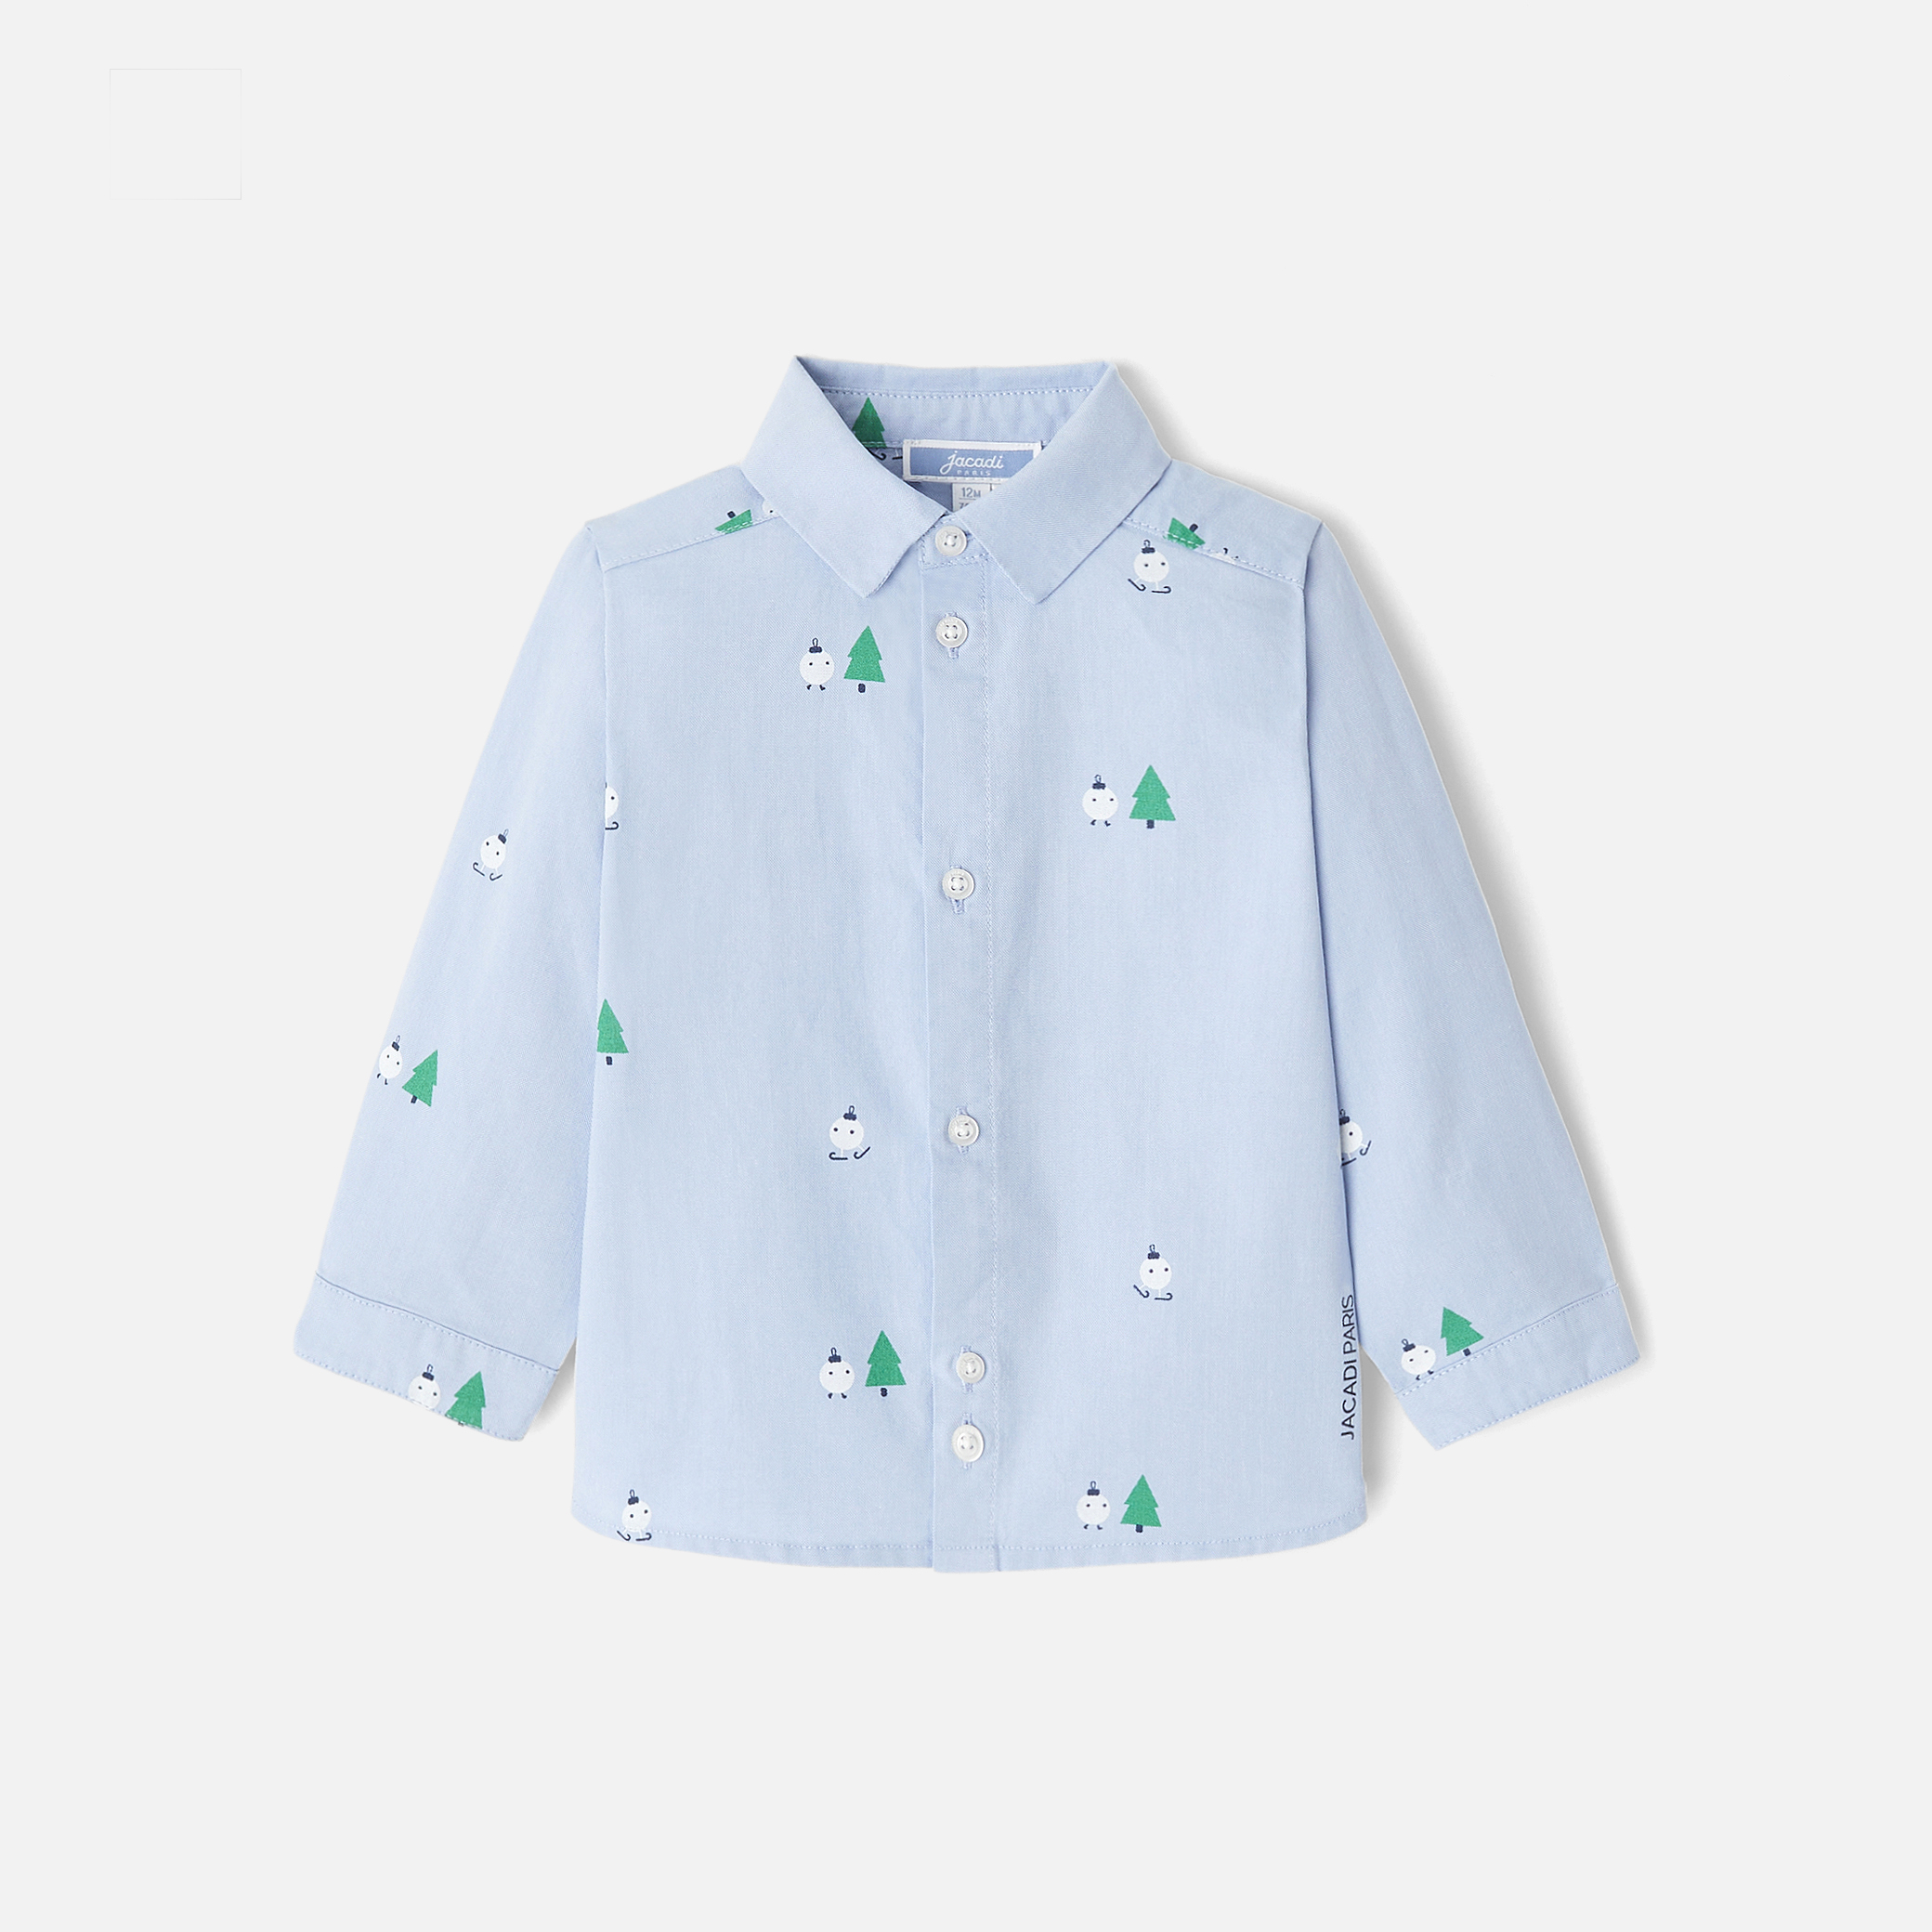 Baby boy shirt with fir trees